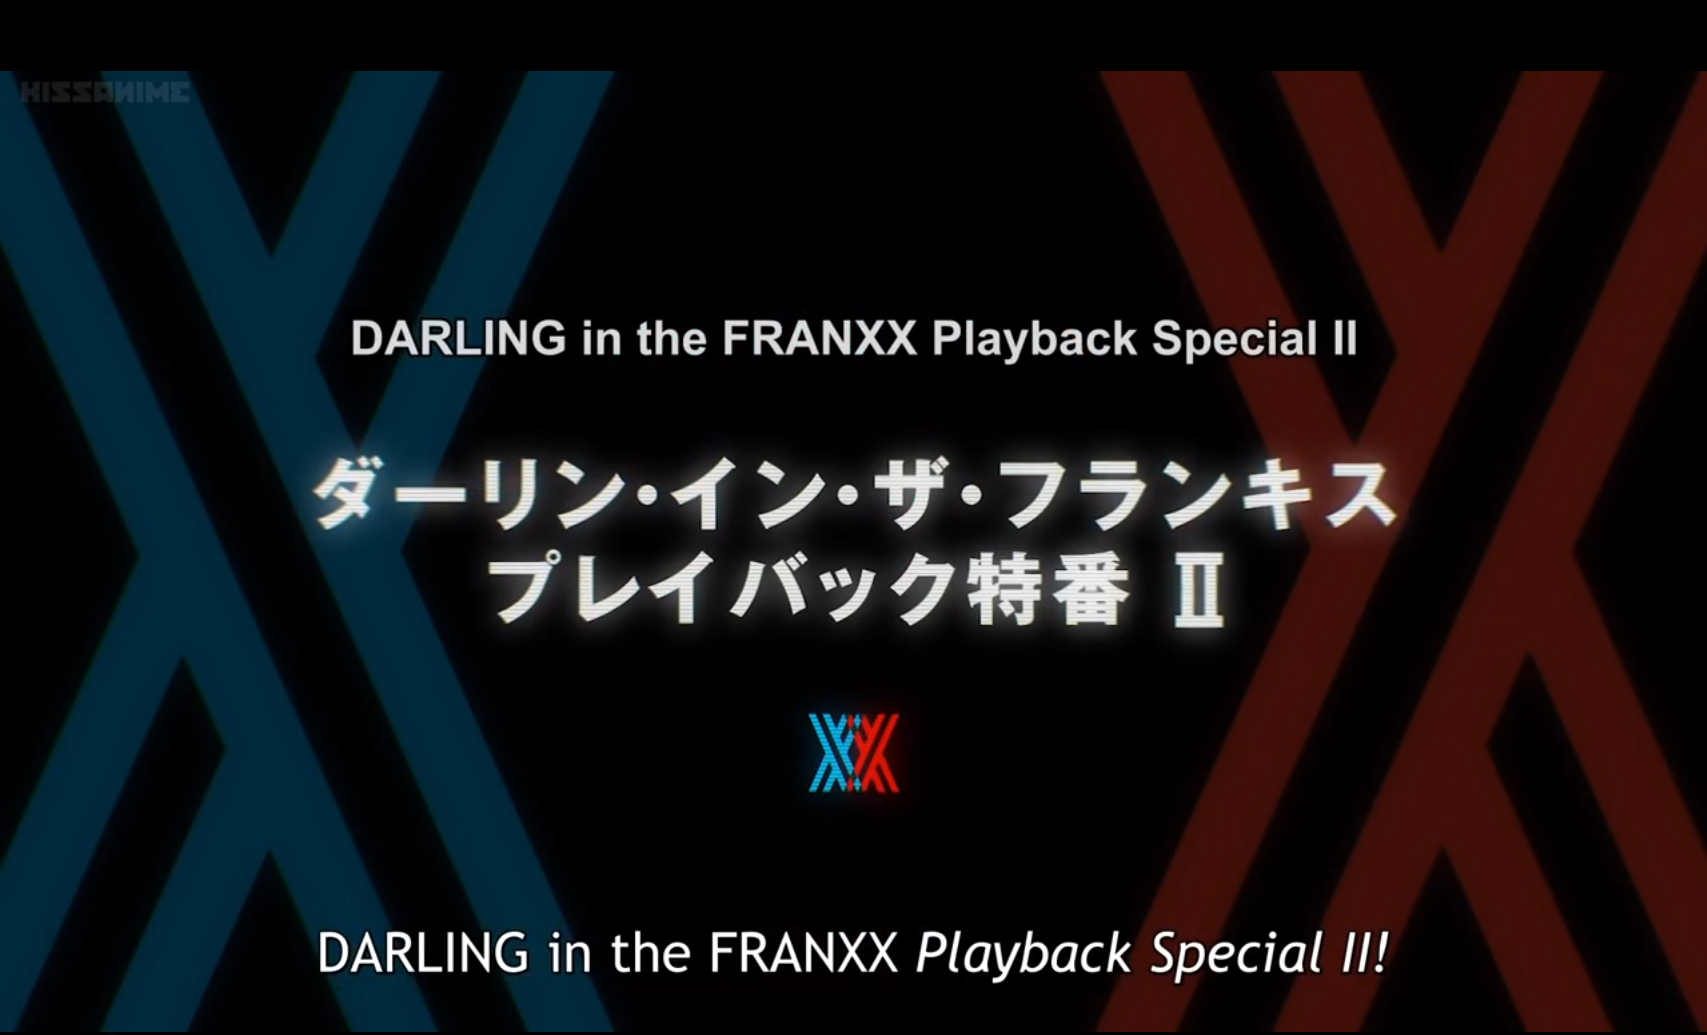 Darling in the Franxx (TV Series 2018) - Episode list - IMDb